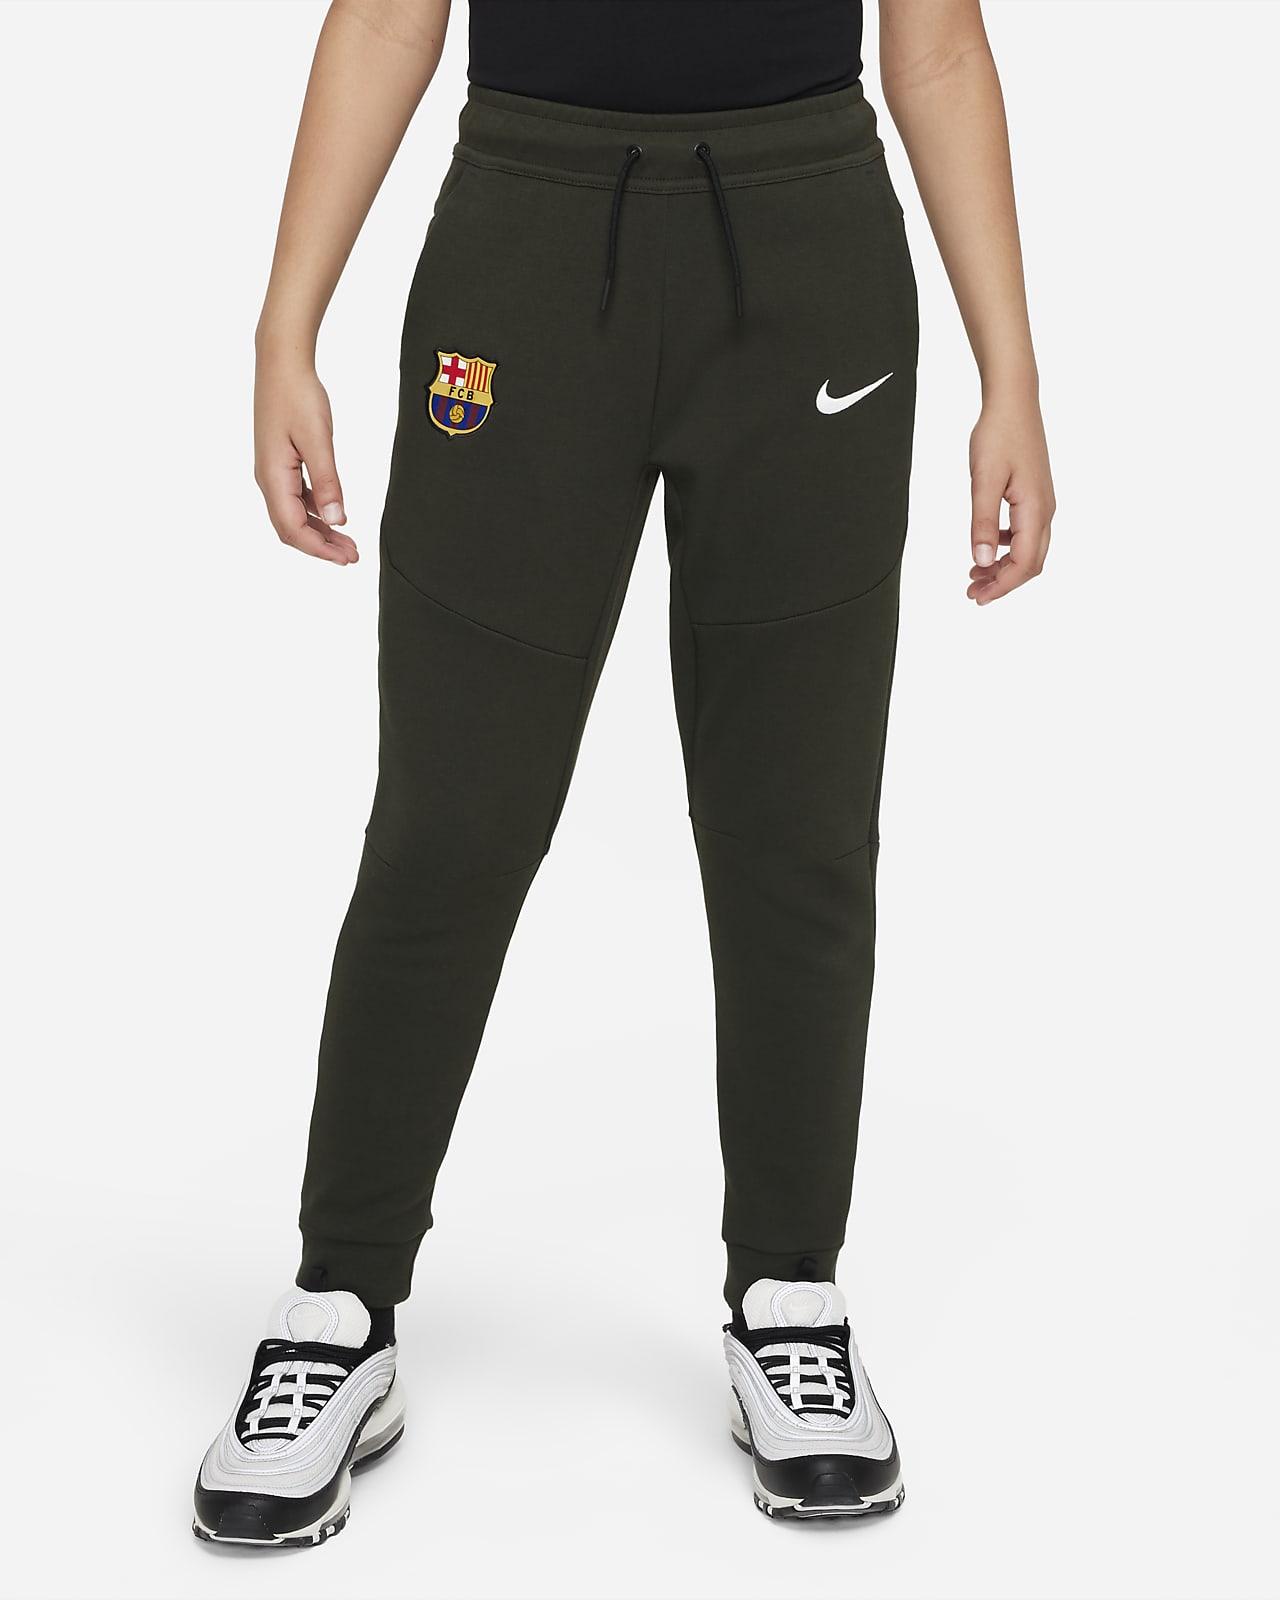 Calças Nike Tech Fleece FC Barcelona Júnior (Rapaz)